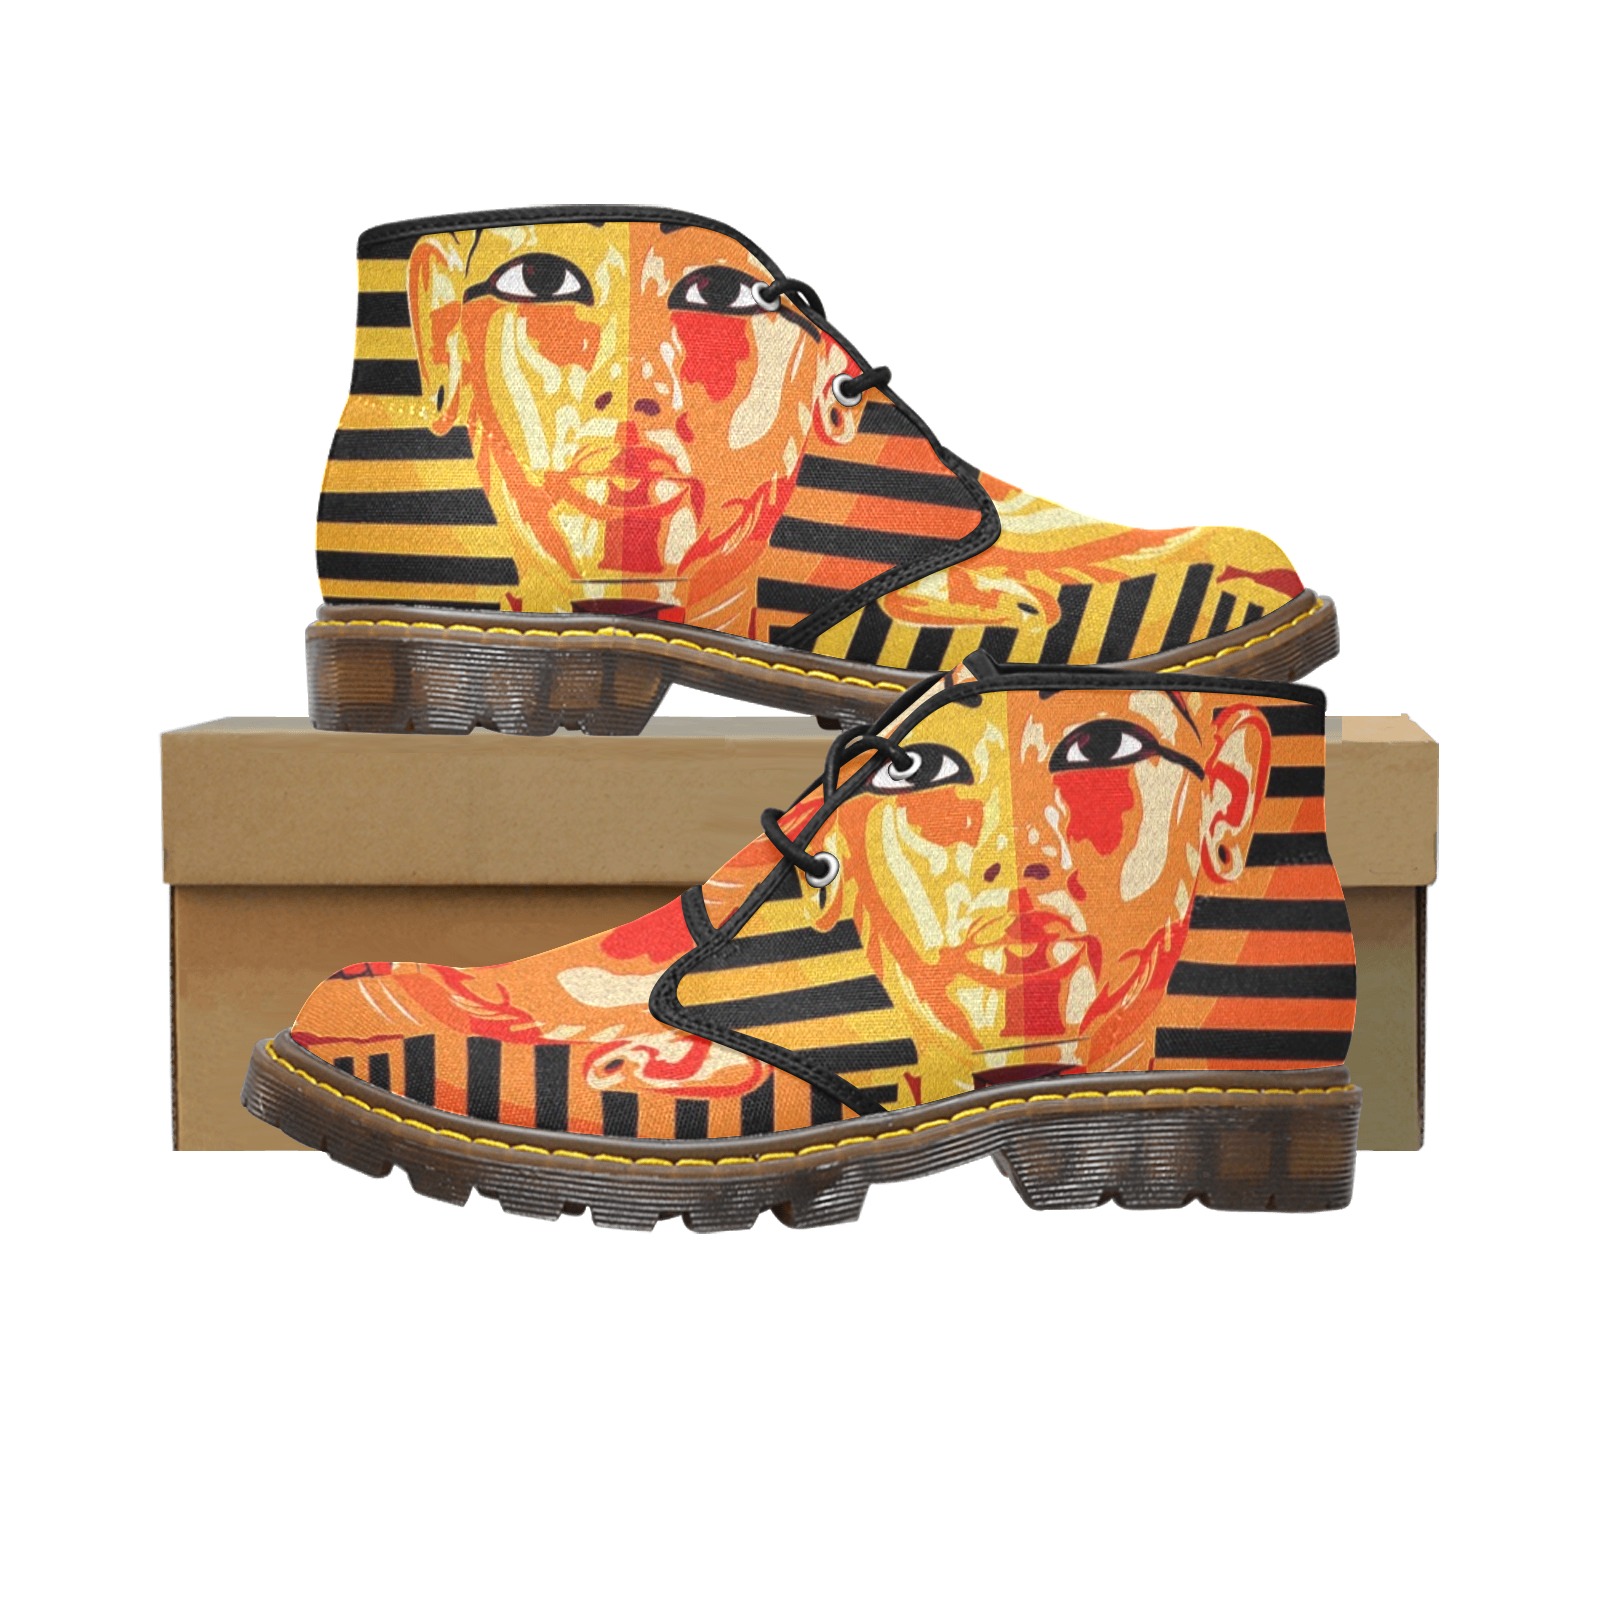 GOLDEN SLUMBER-KING TUT 2 Men's Canvas Chukka Boots (Model 2402-1)